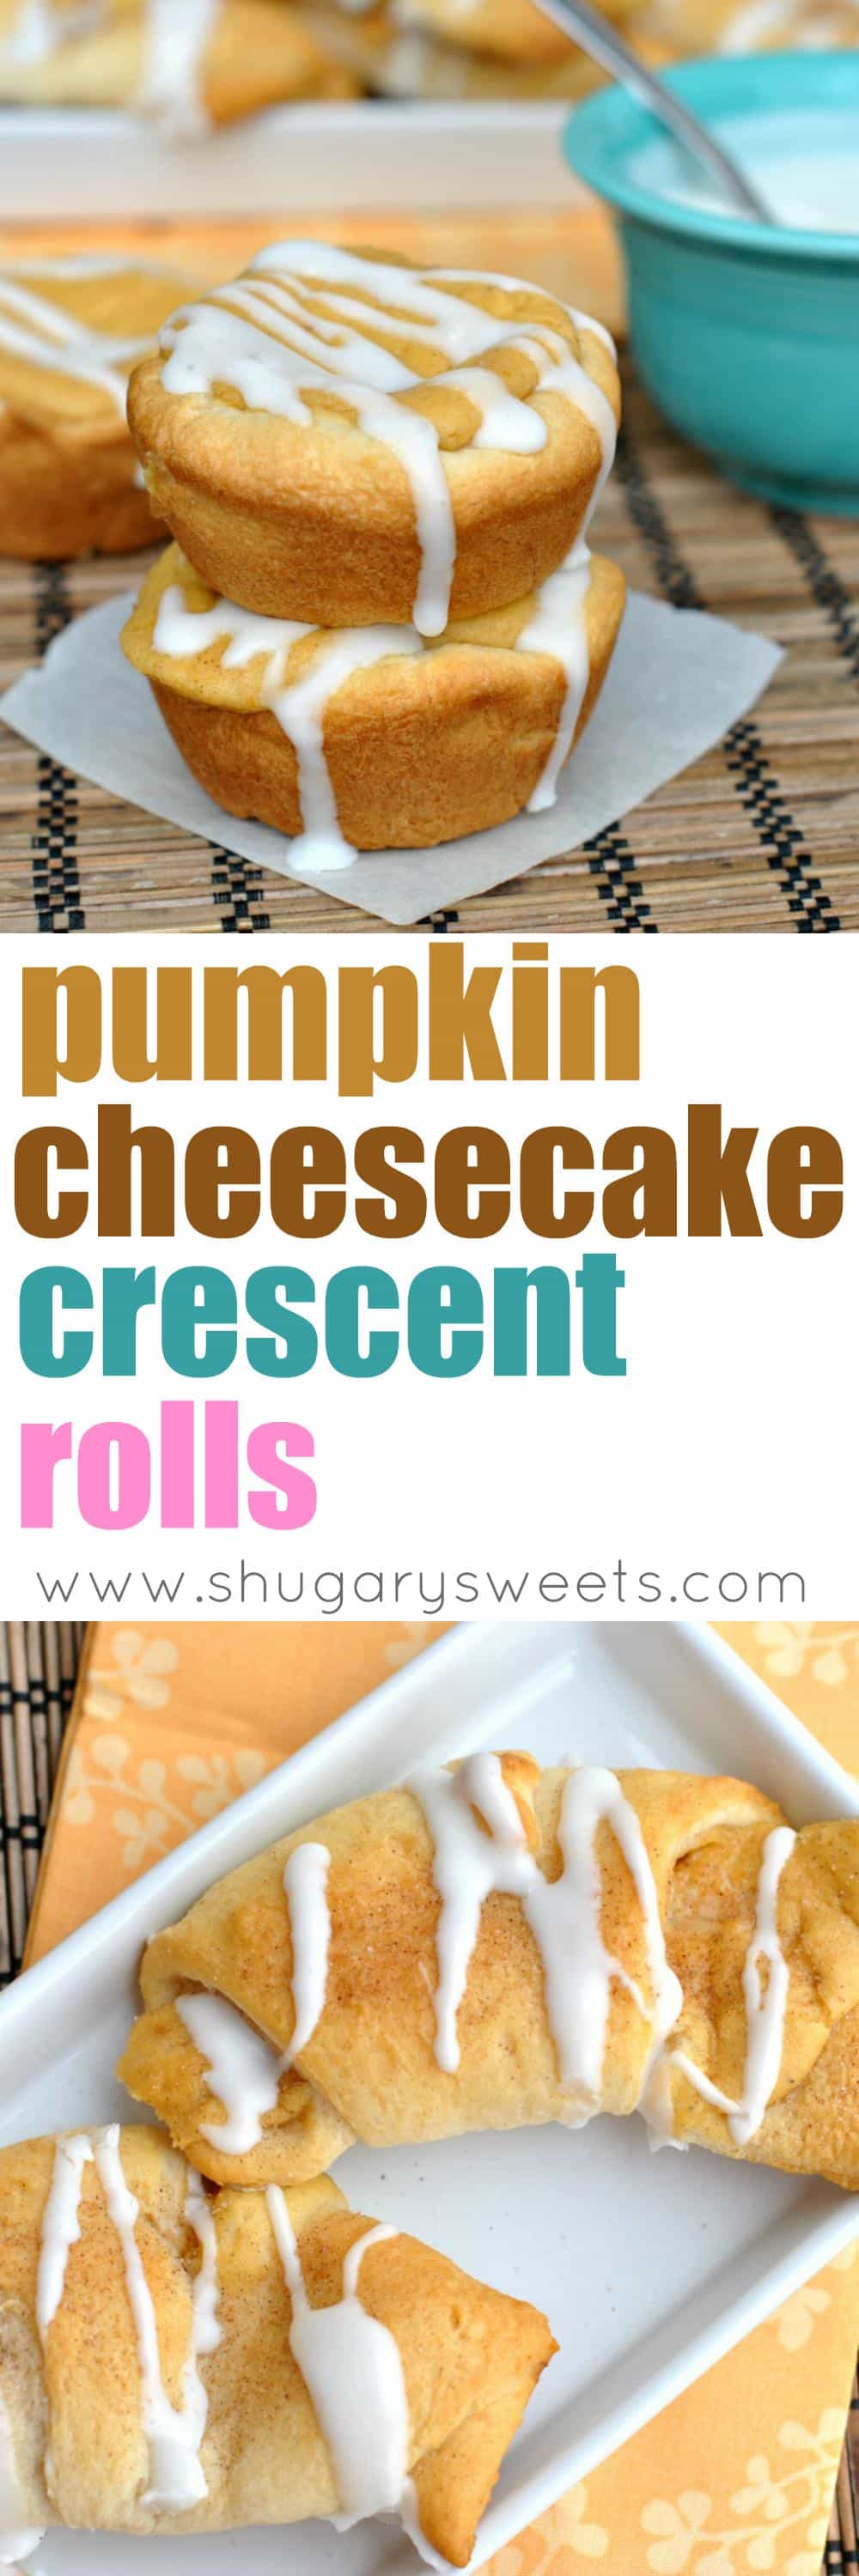 pumpkin-cheesecake-crescent-rolls-11 - Shugary Sweets